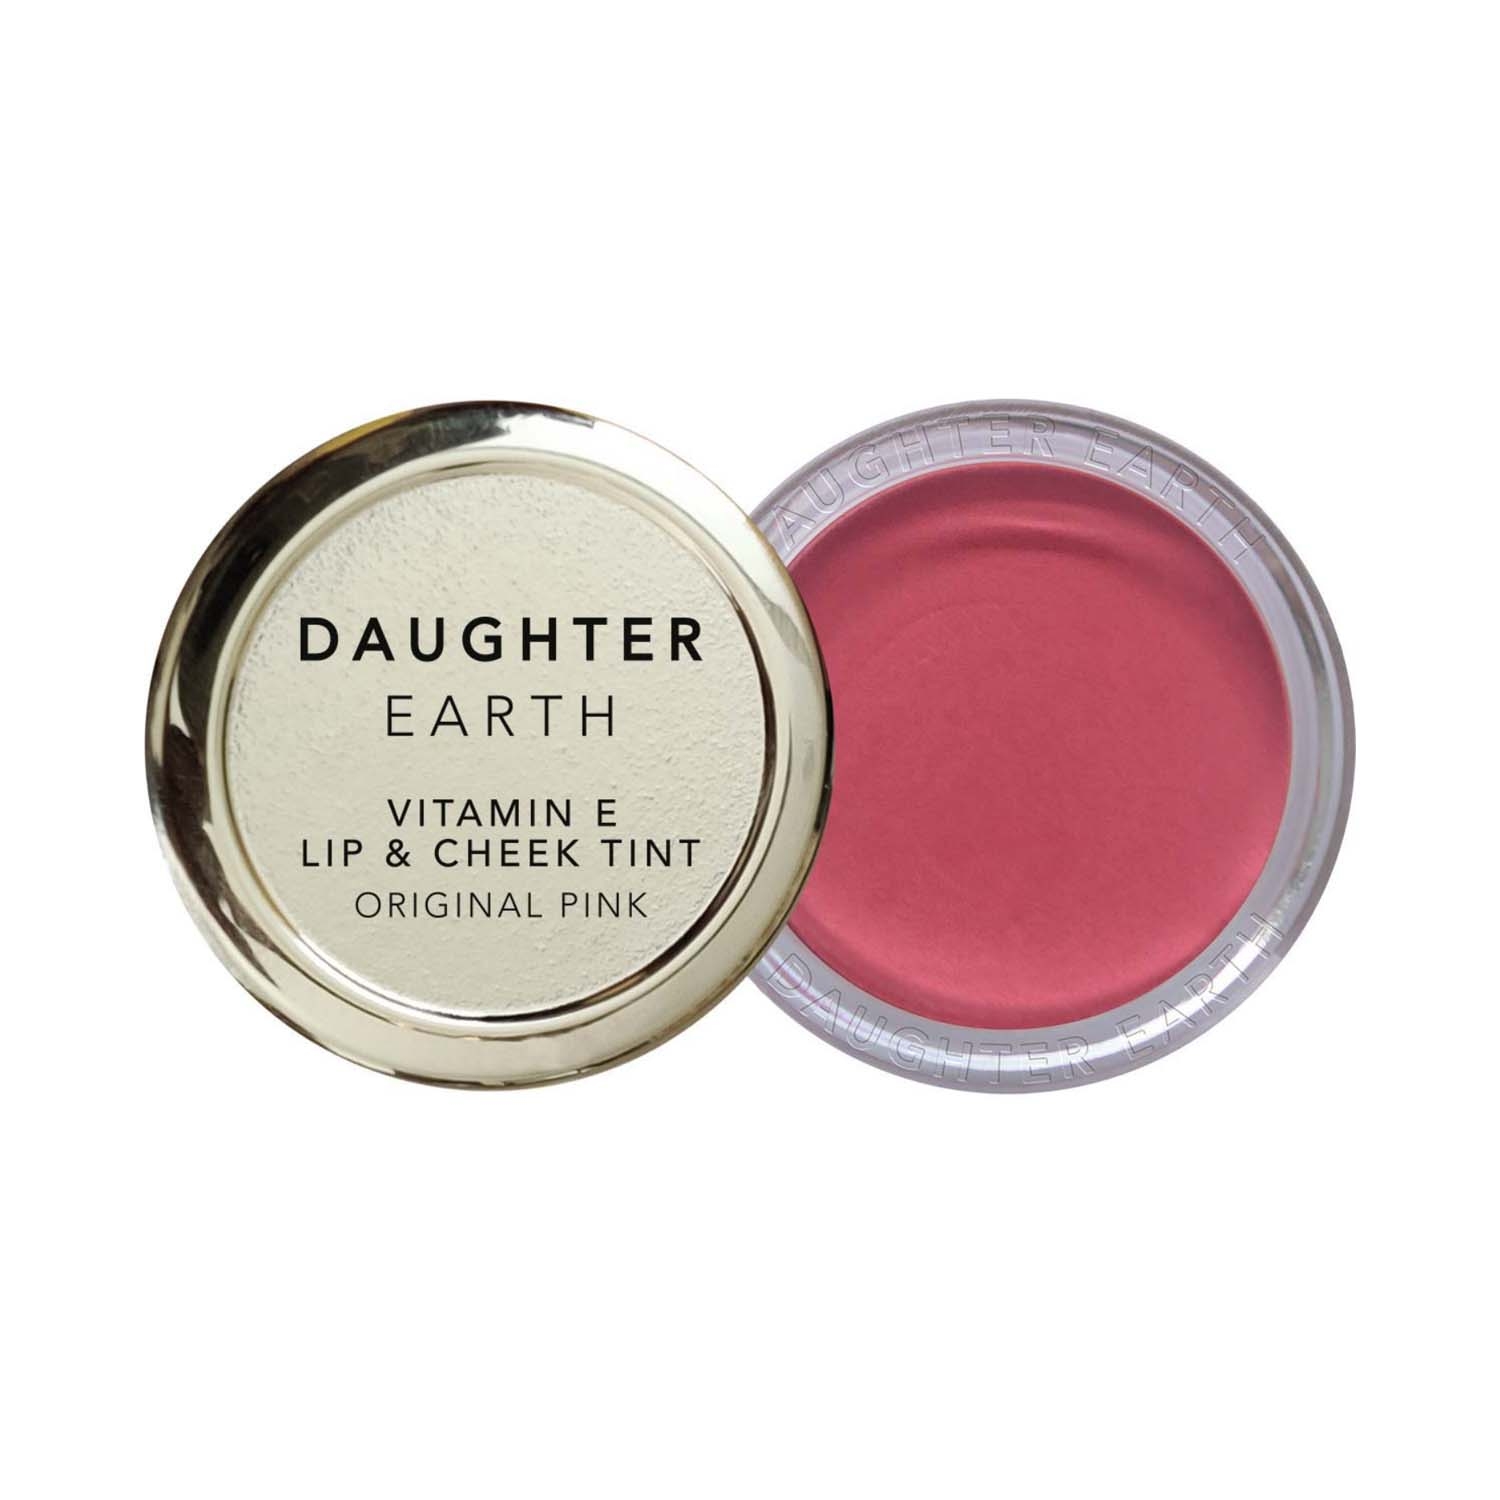 DAUGHTER EARTH | DAUGHTER EARTH Vitamin E Lip & Cheek Tint - The Original Pink (4.5g)